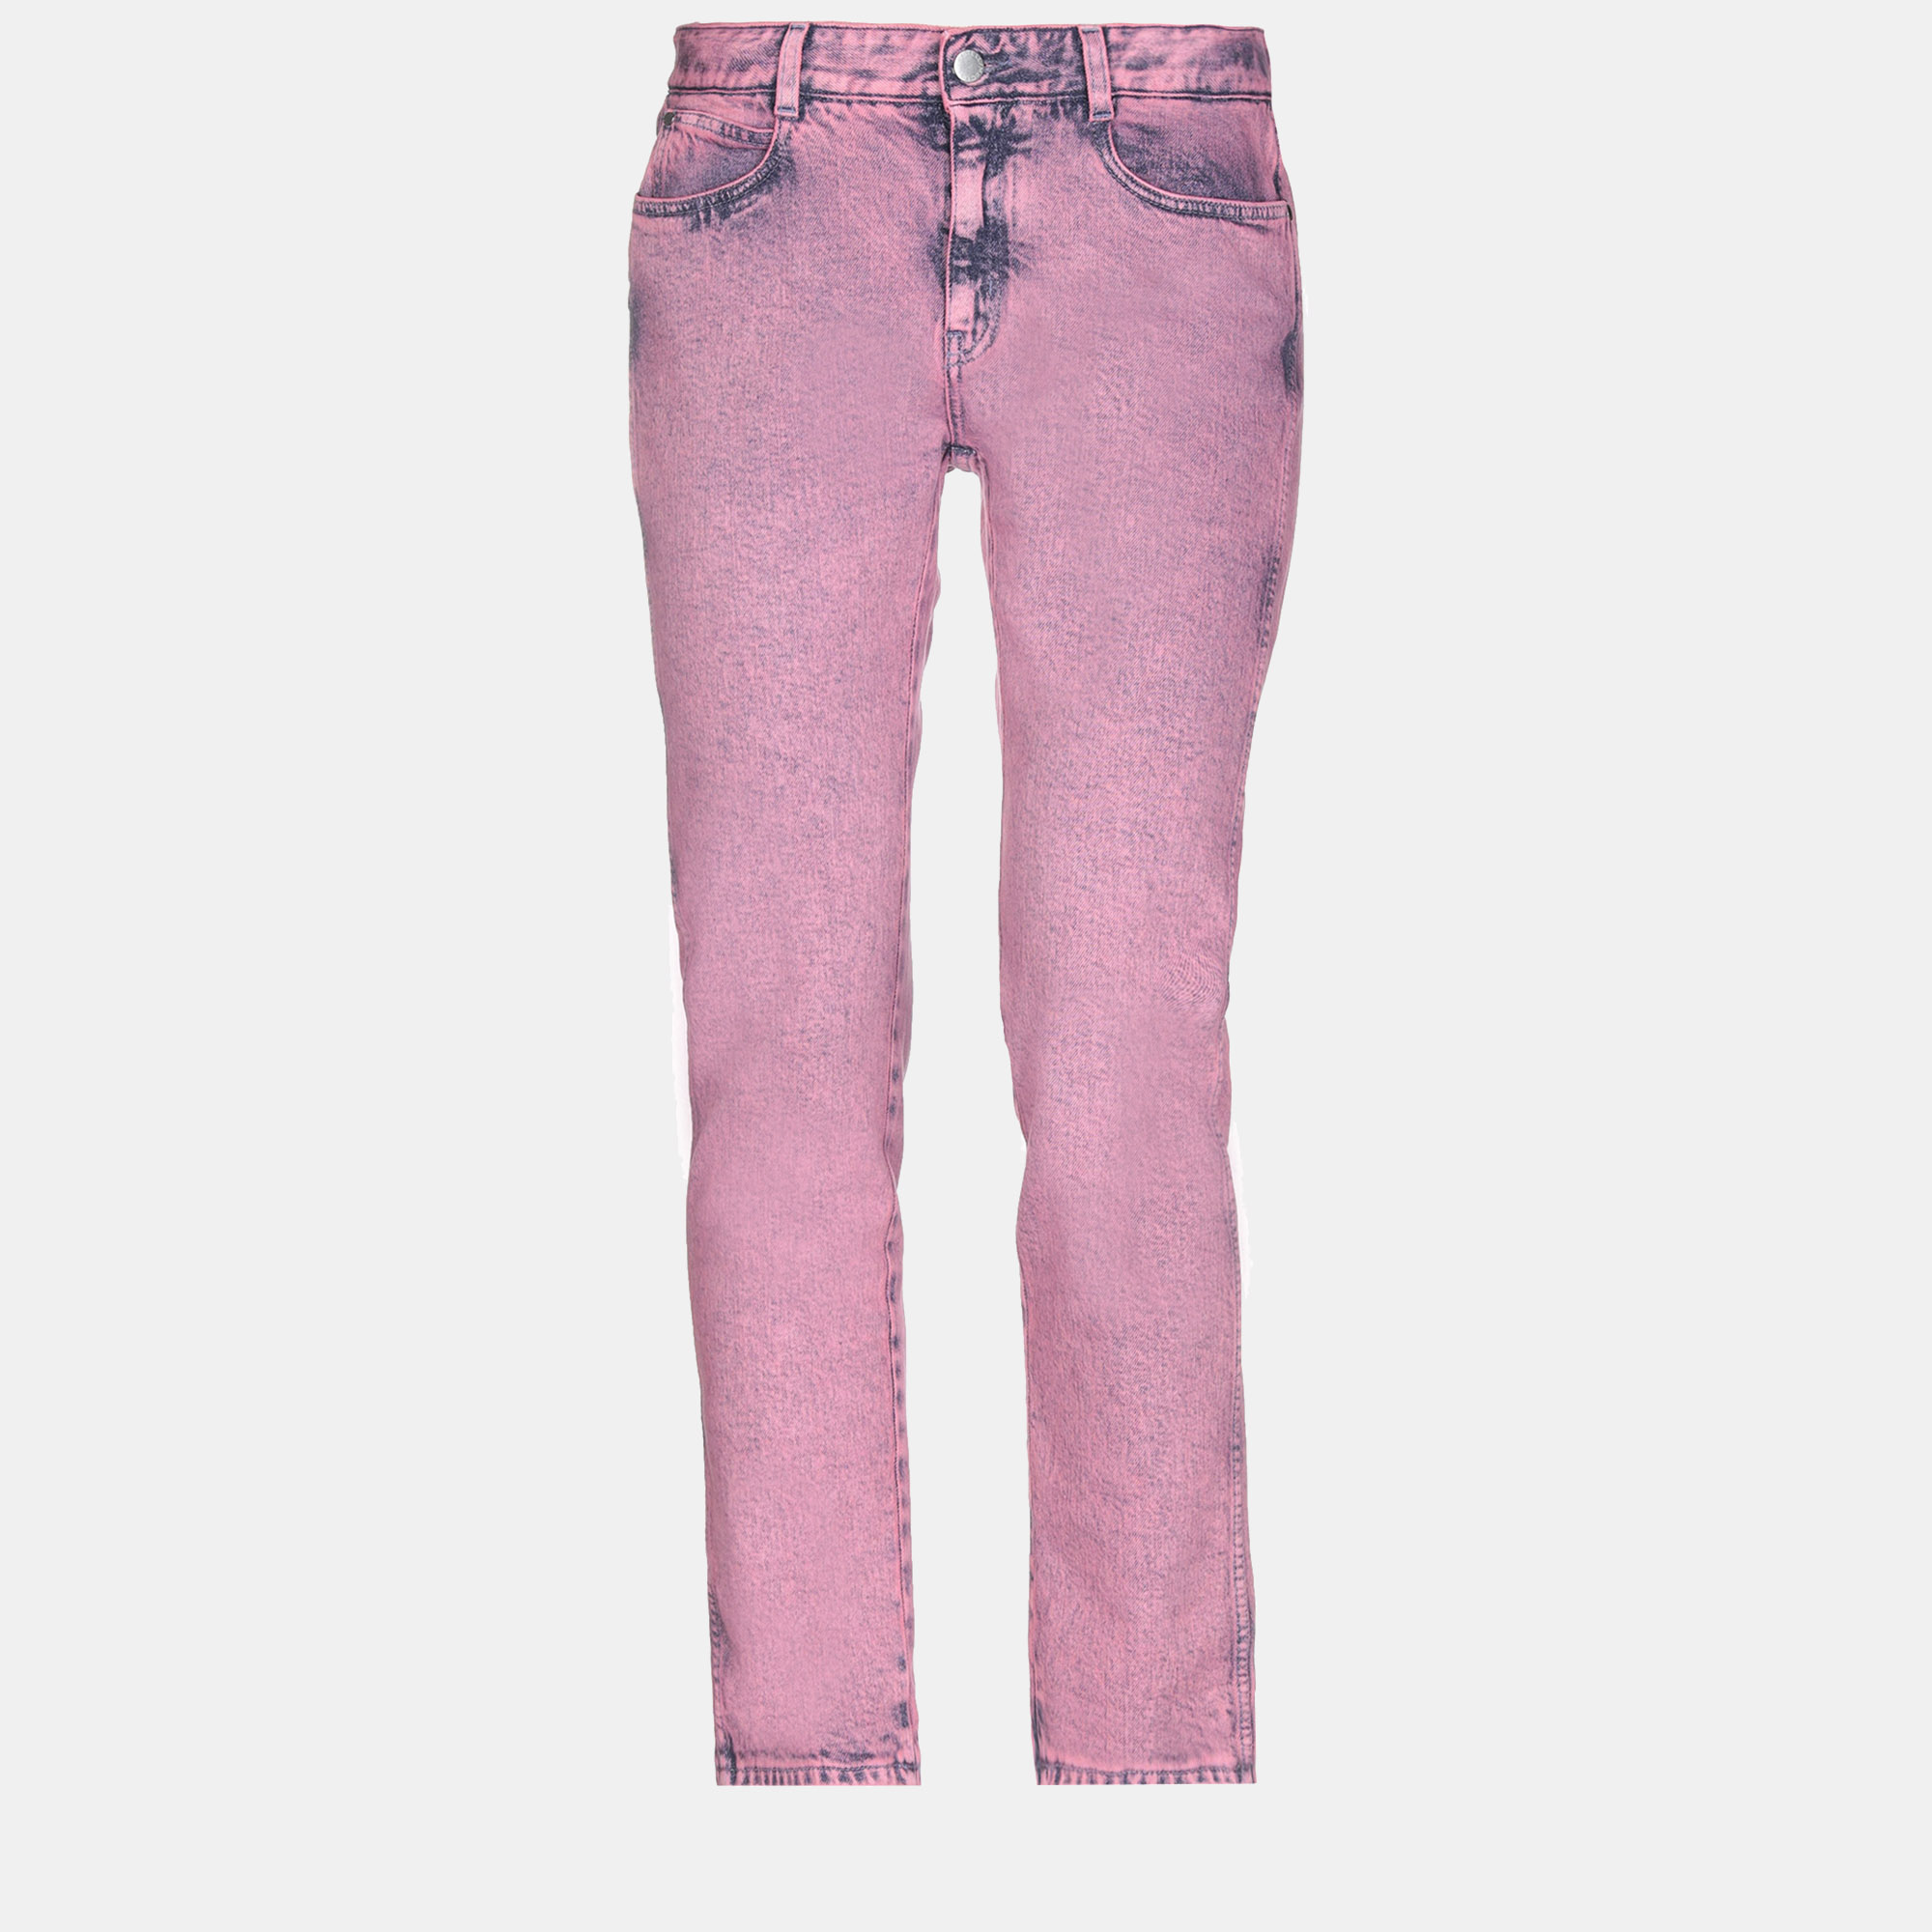 Stella mccartney cotton jeans 27